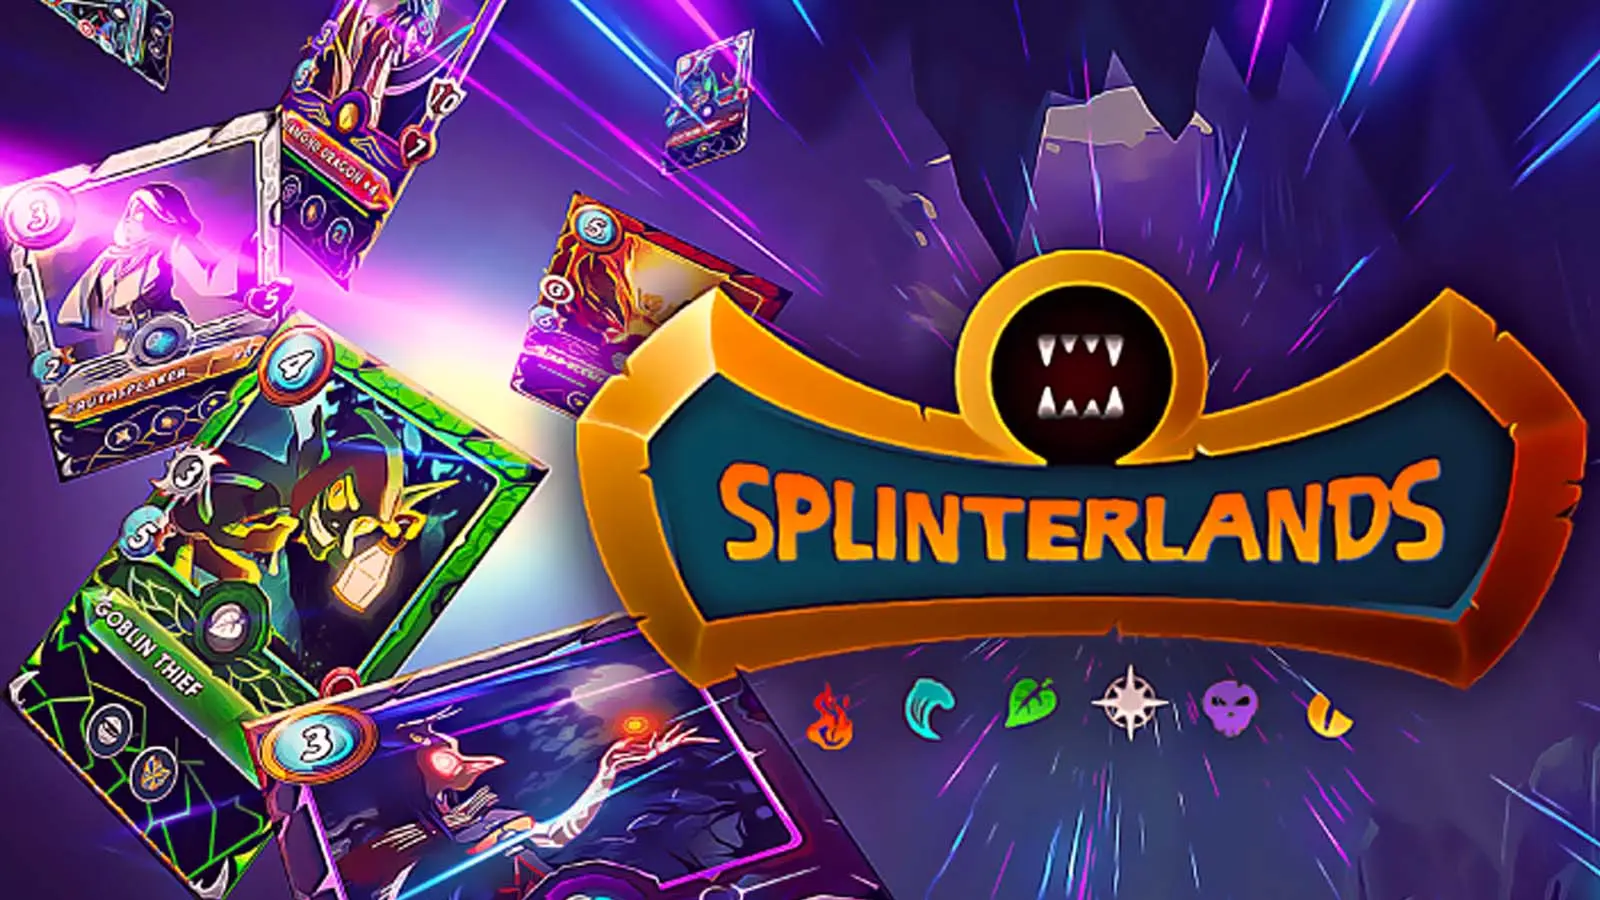 Splinterlands, the Future of Card Games